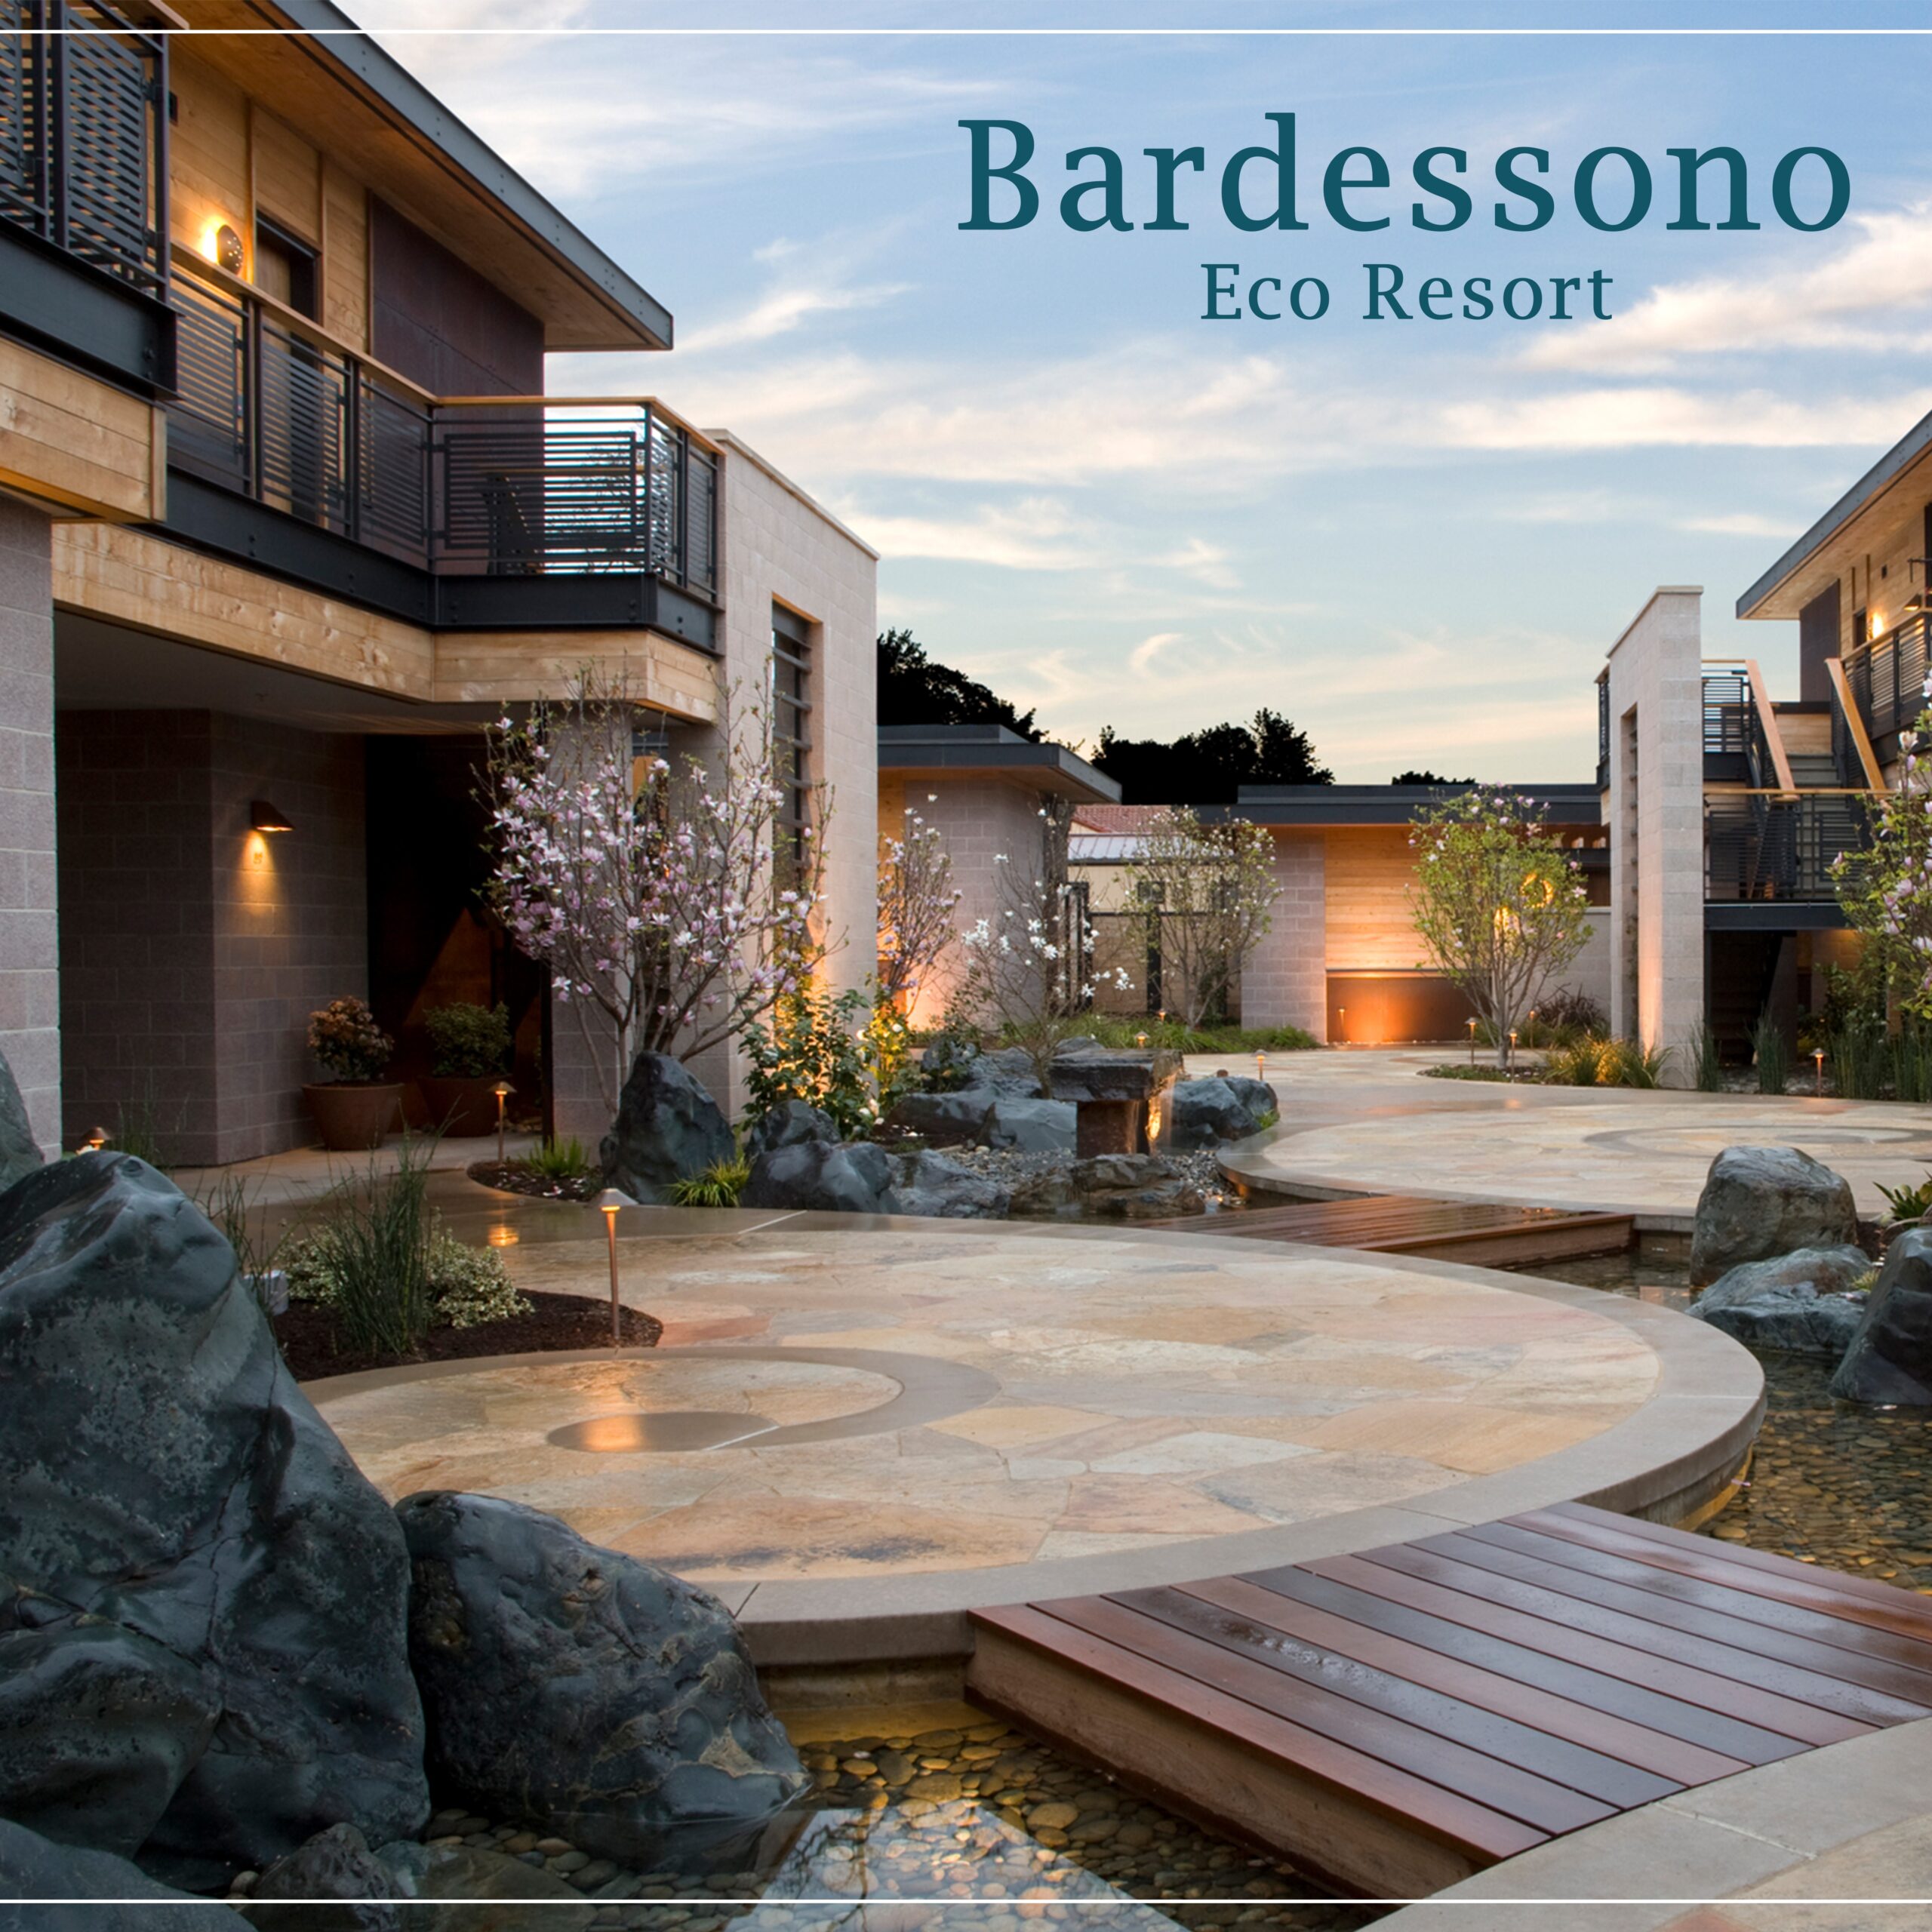 Bardessono Eco Resort: Case Study